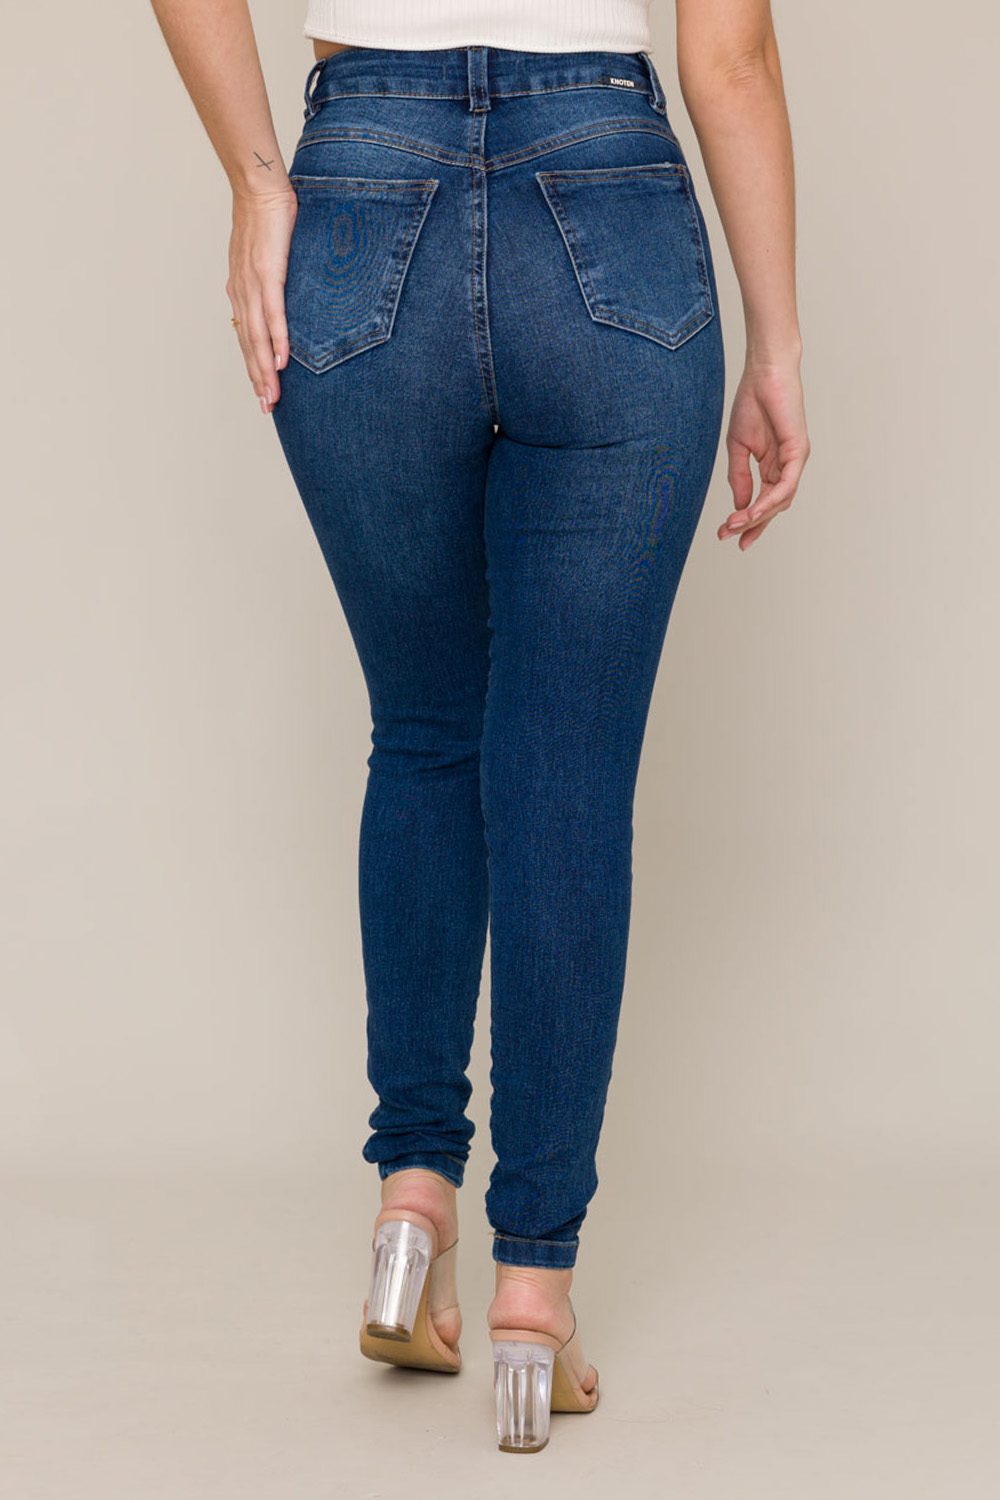 Calça Skinny Basic 11719 - Jeans Médio 3